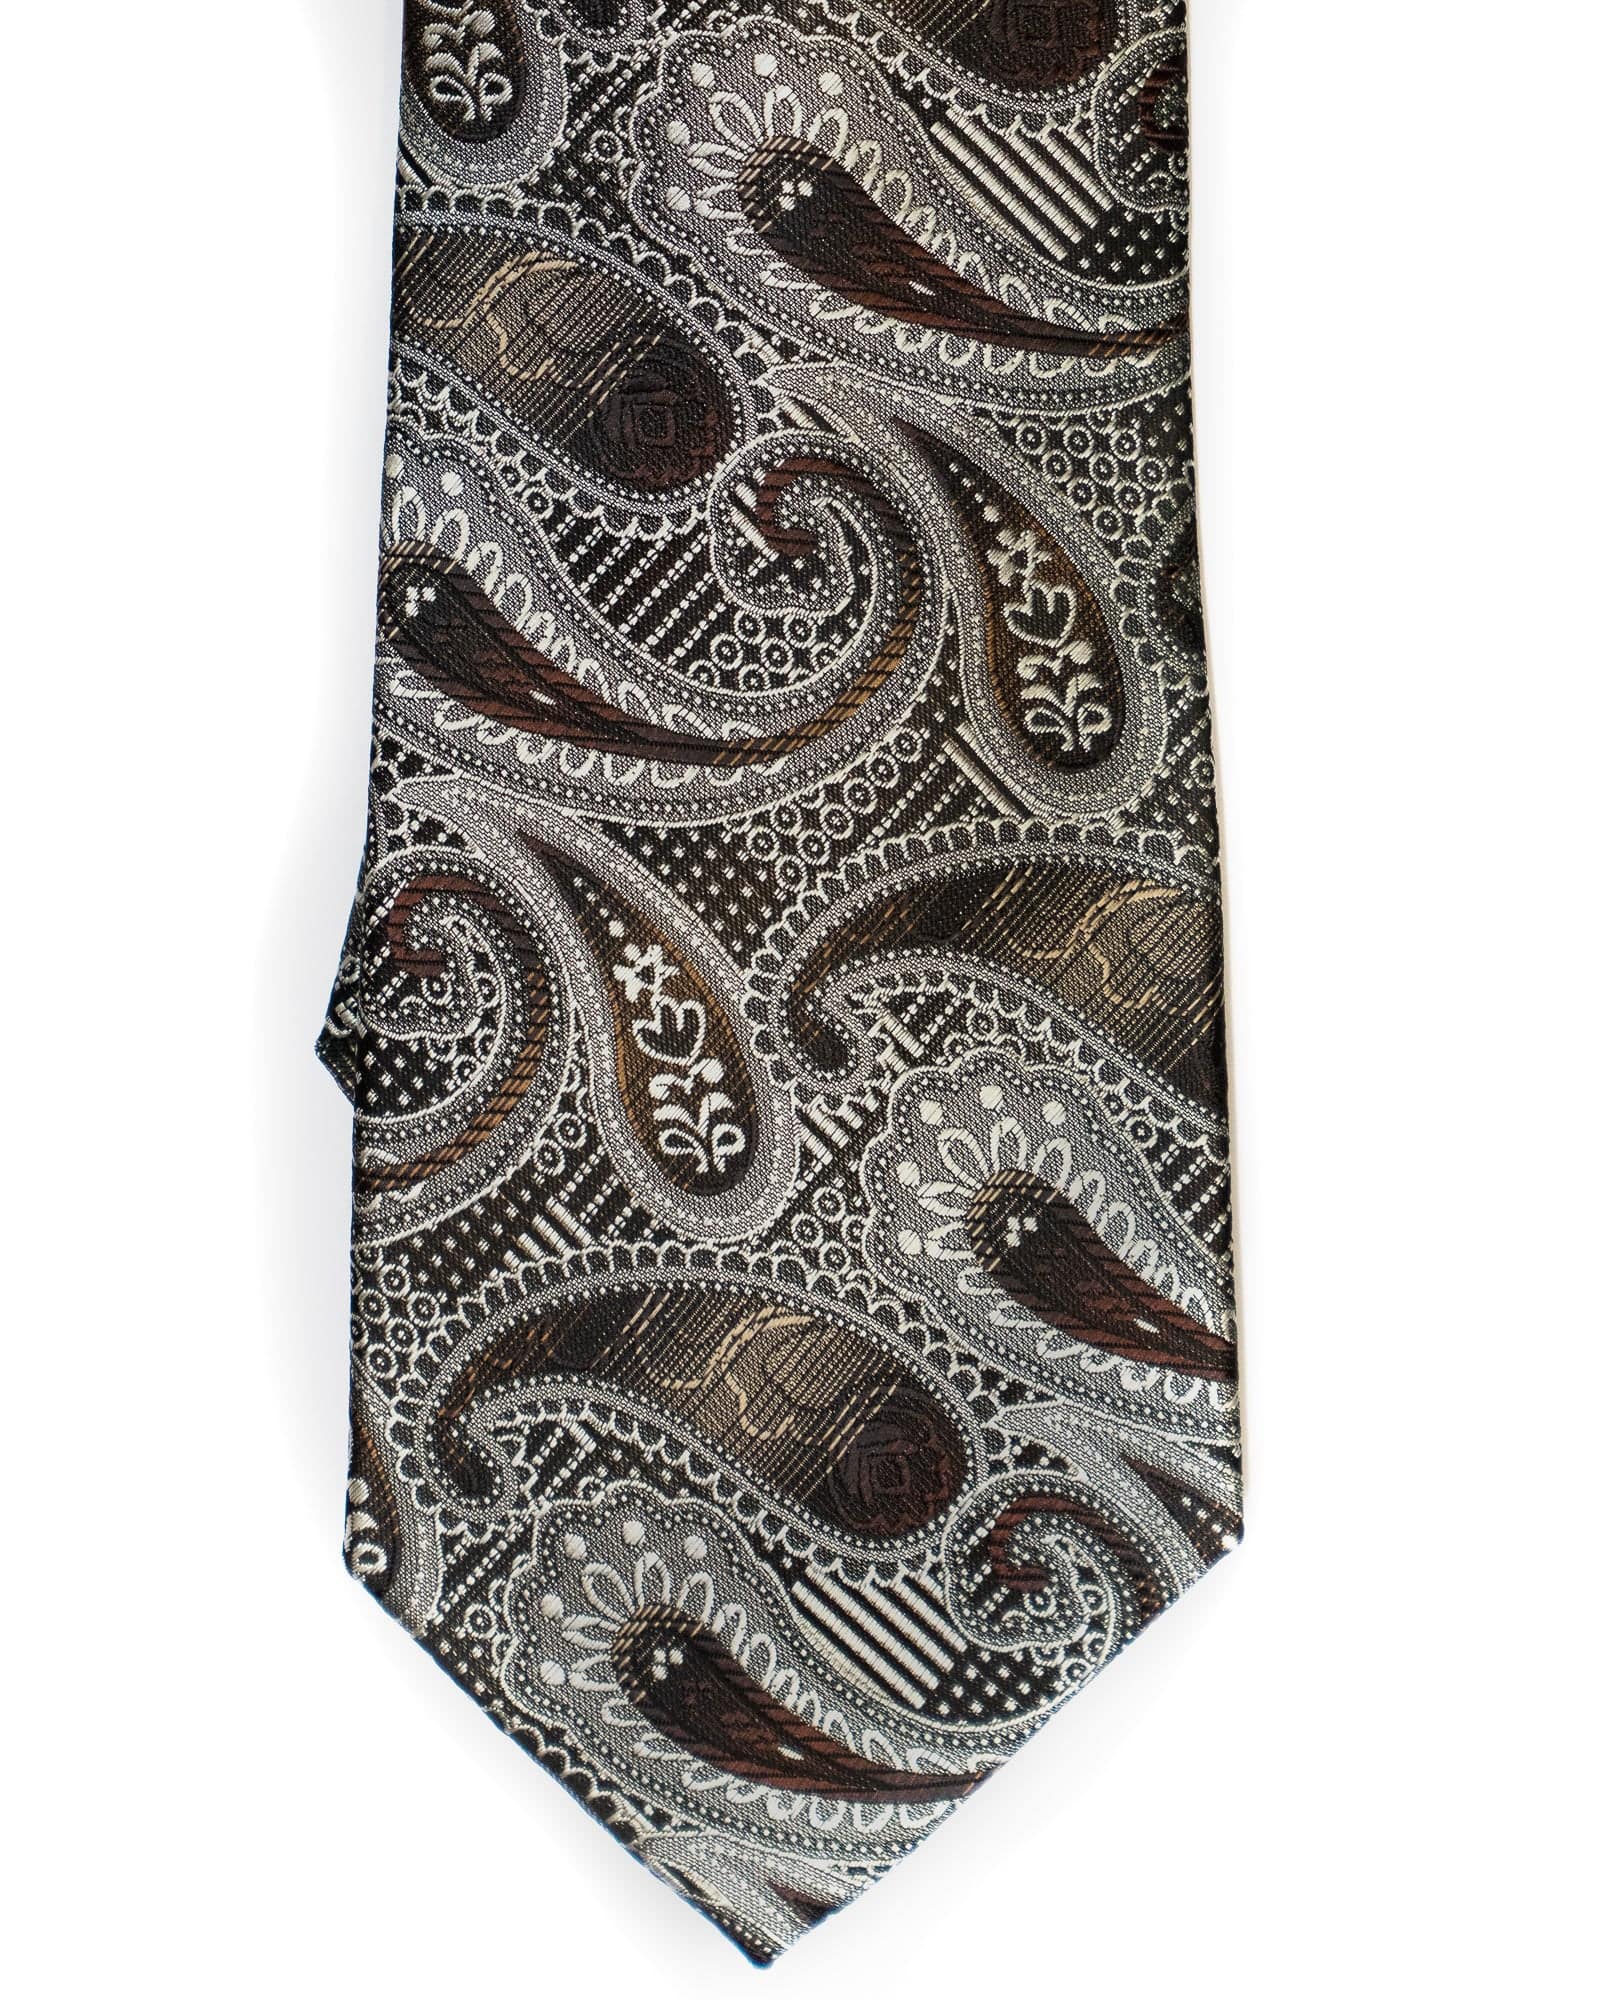 Venturi Uomo Paisley Tie in Brown with Grey - Rainwater's Men's Clothing and Tuxedo Rental